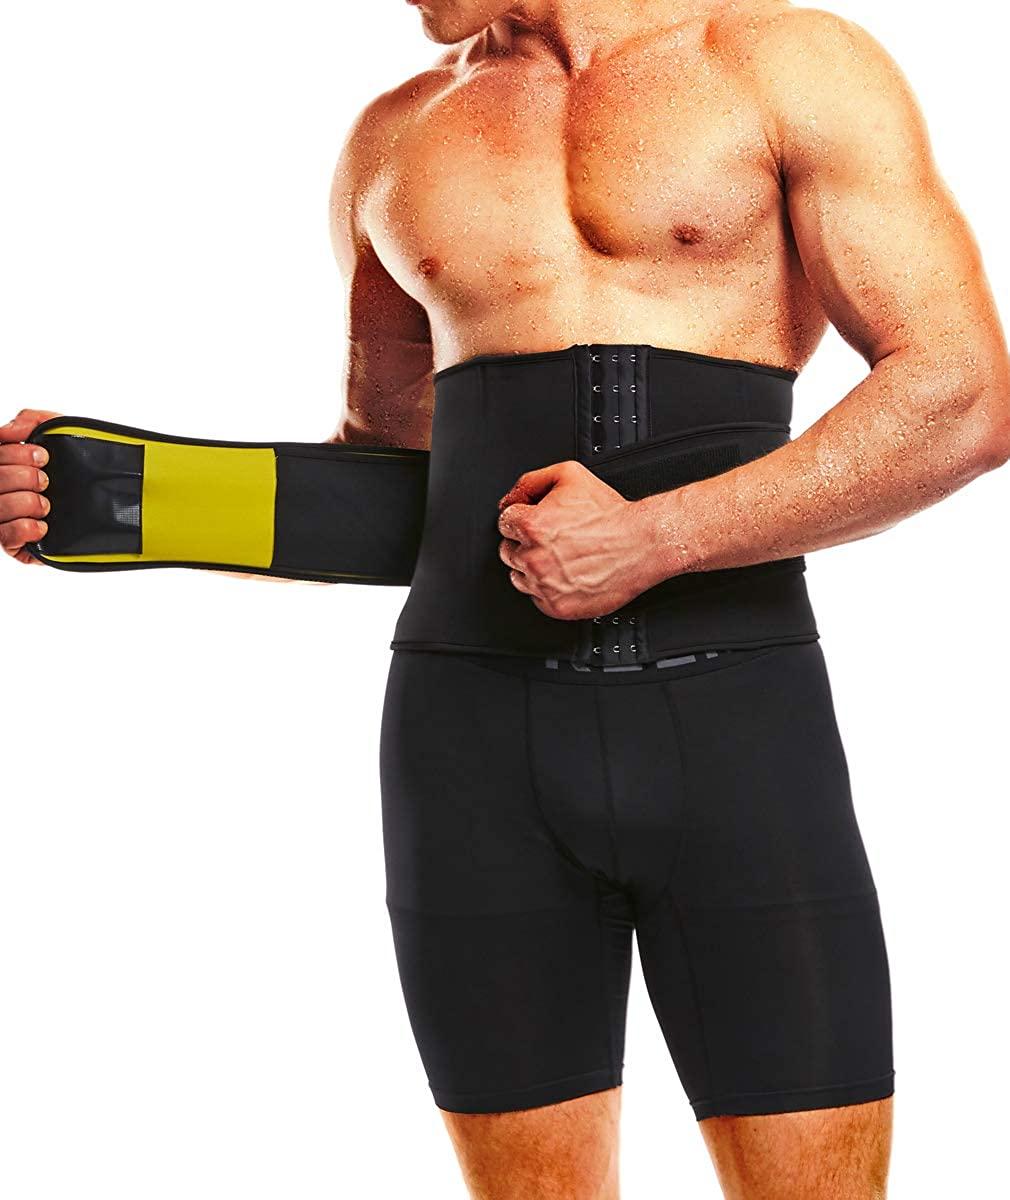 Neoprene Sauna Sweat Belt For Men Waist And Tummy Control Mens